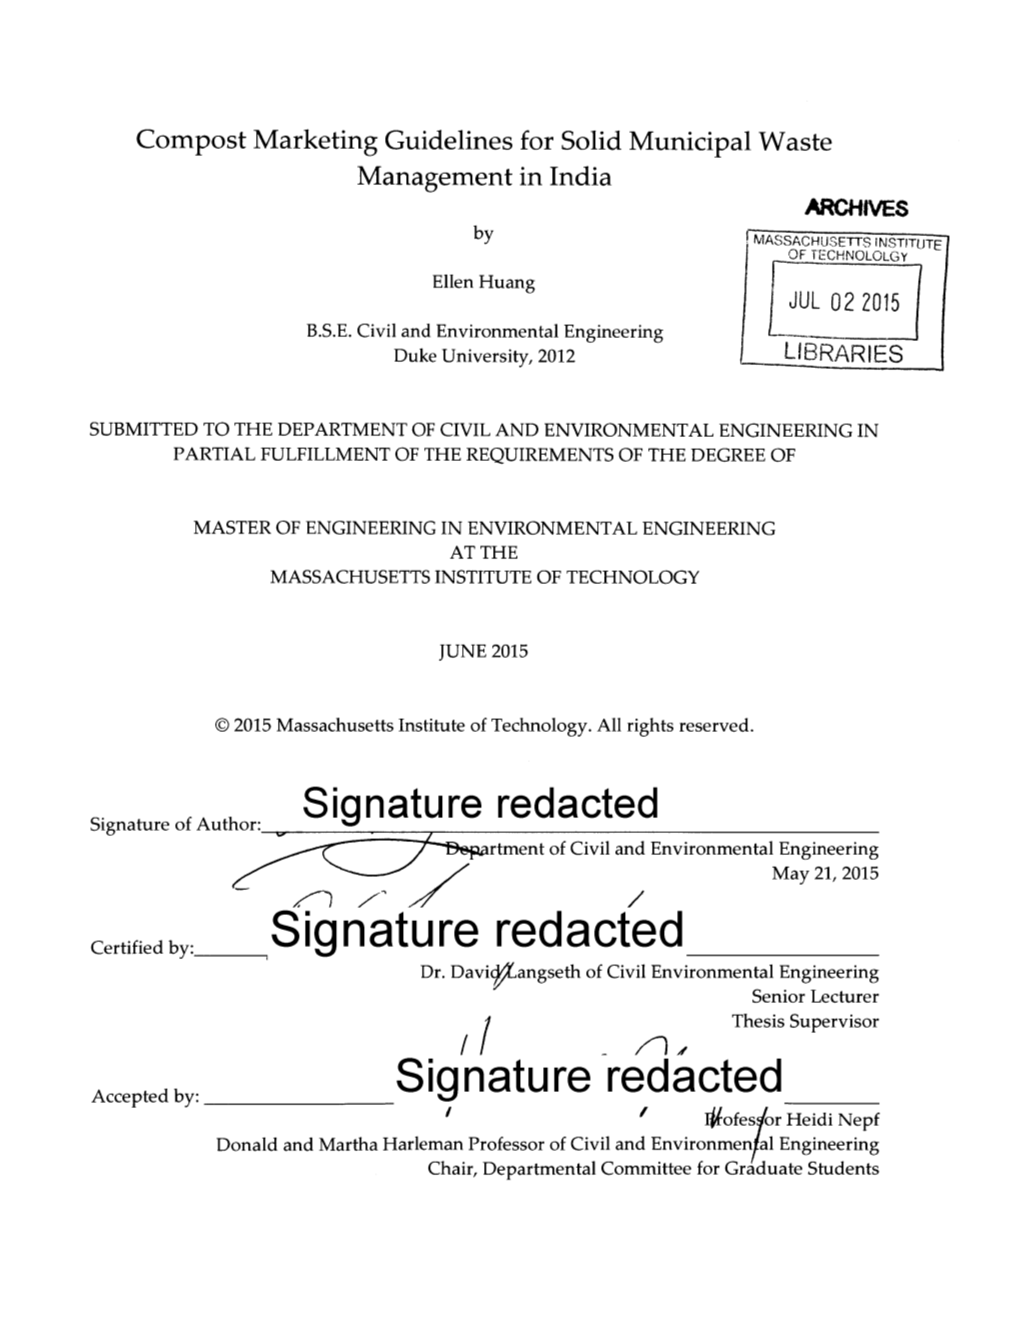 Signature Redacted Rtment of Civil and Environmental Engineering May 21, 2015